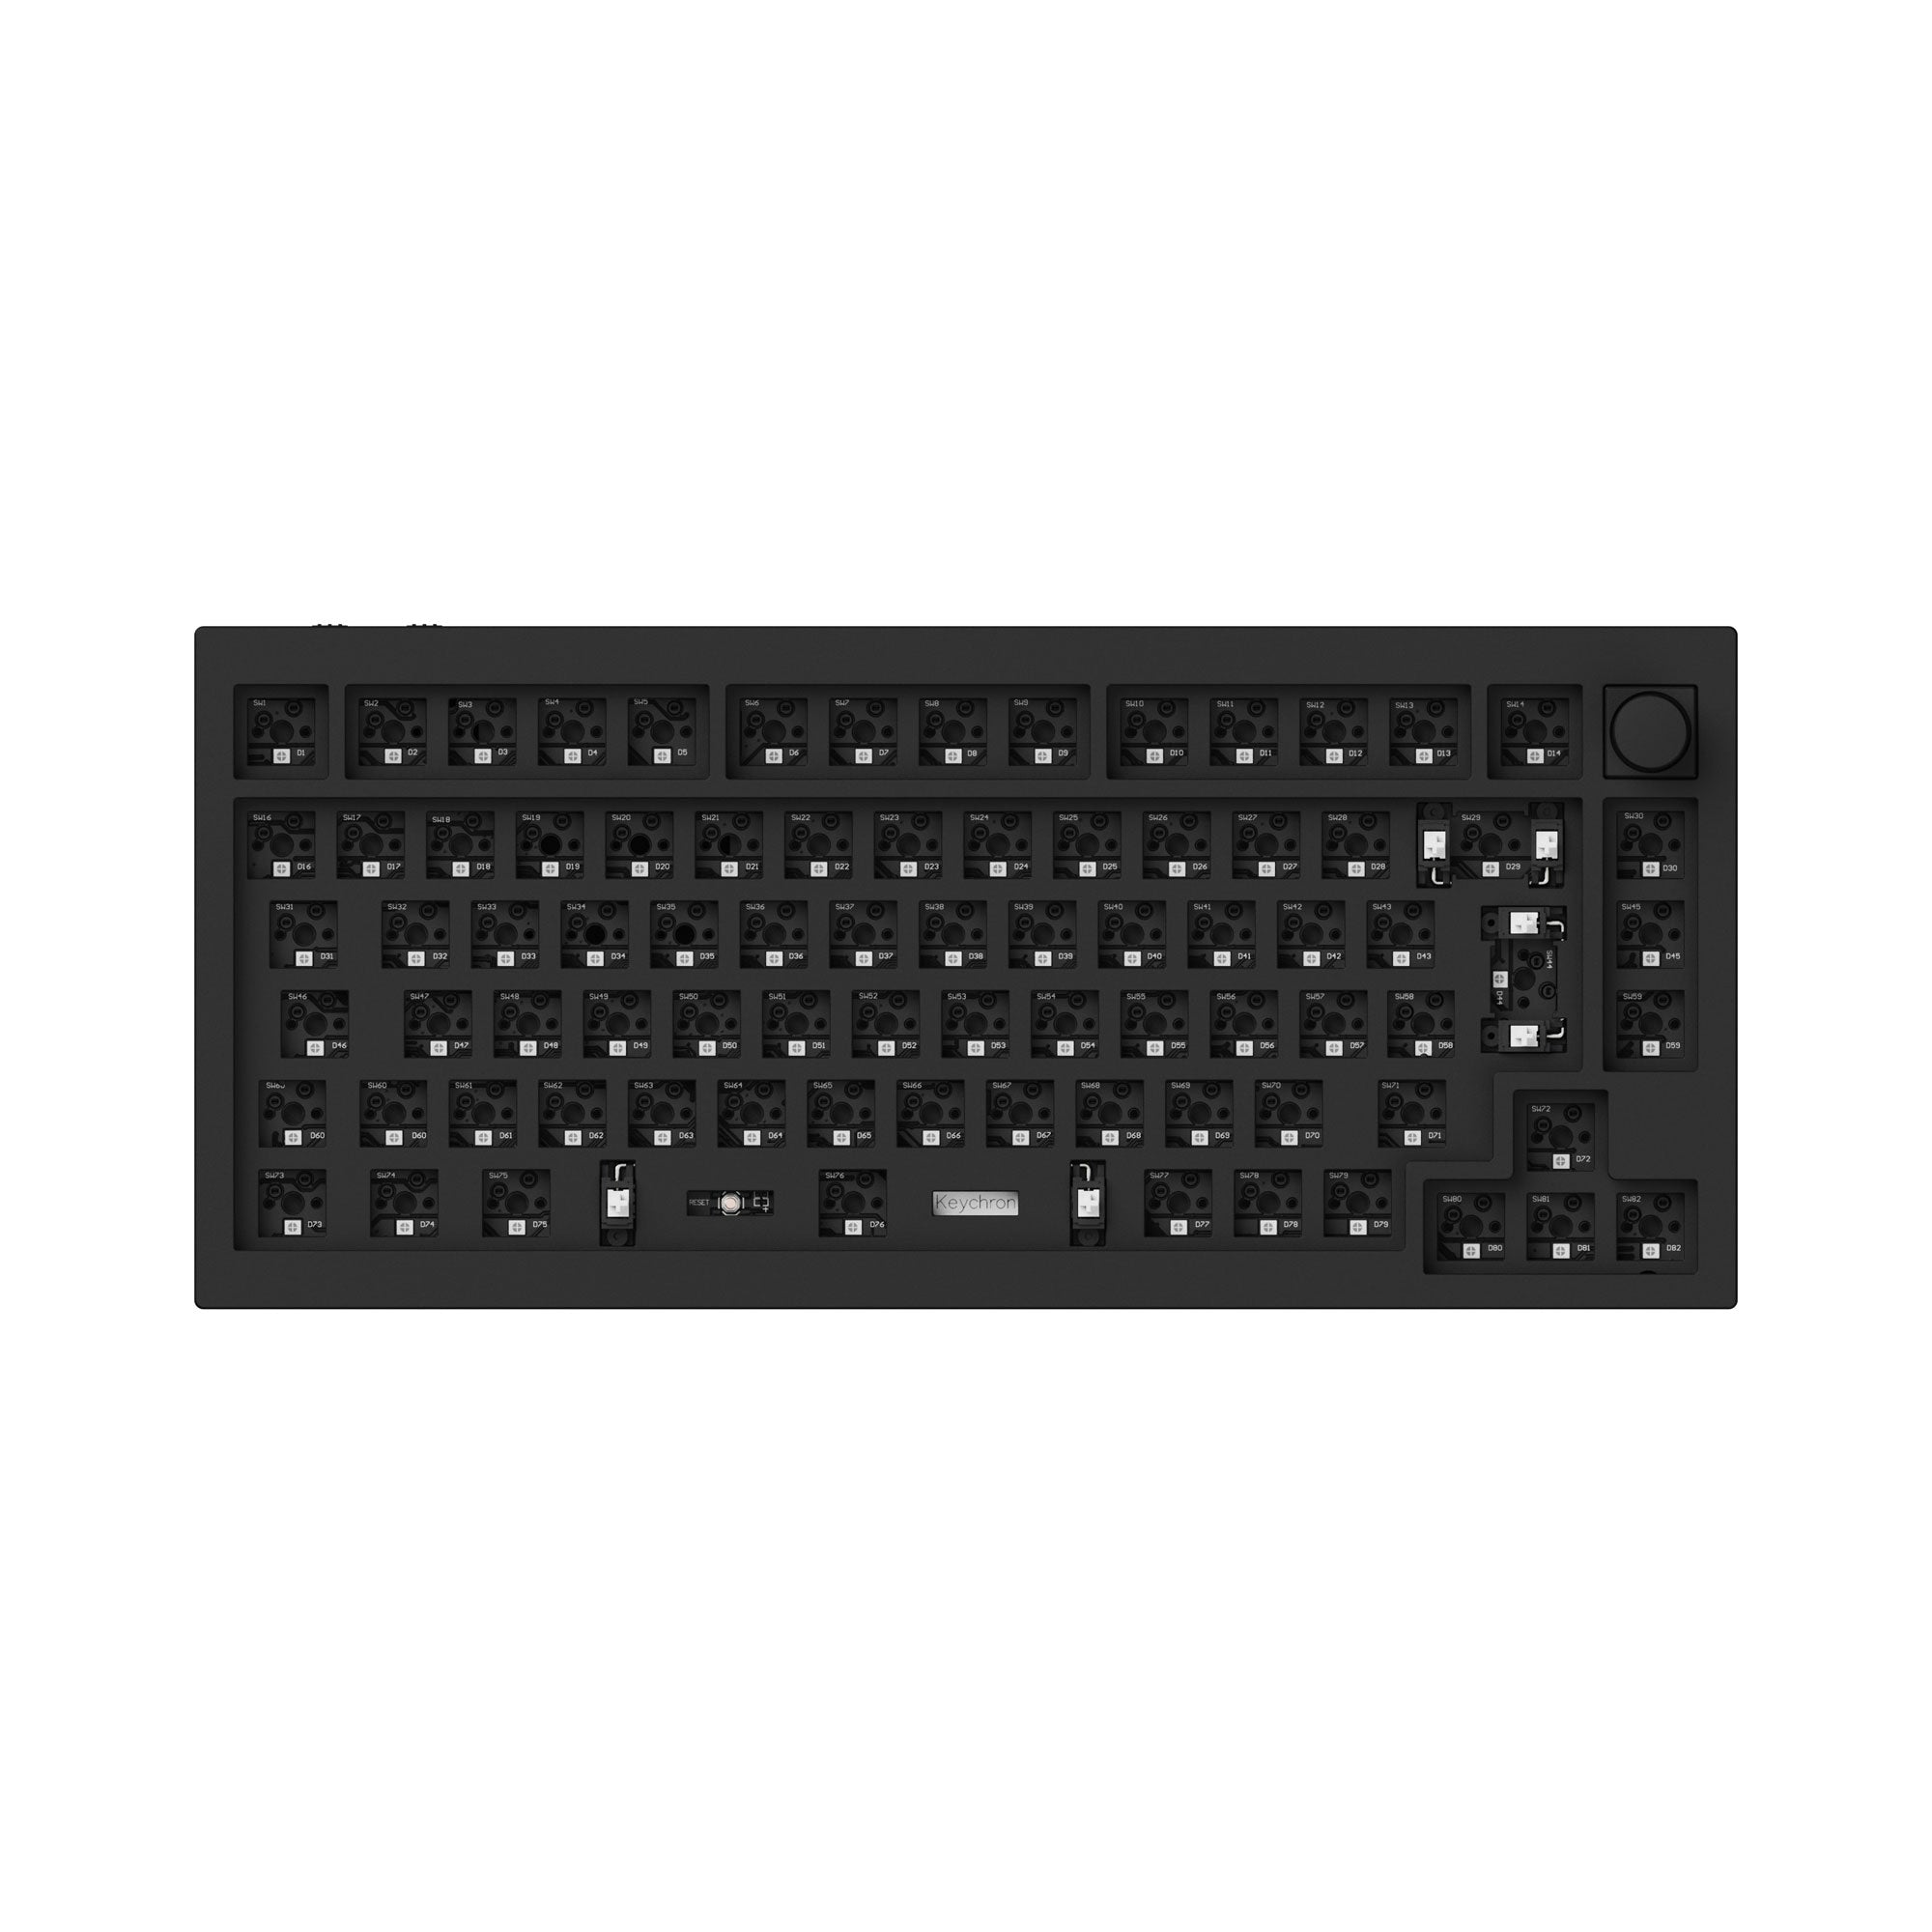 Keychron Q1 Pro QMK/VIA wireless custom mechanical keyboard knob 75% layout full aluminum black frame for Mac Windows Linux barebone ISO